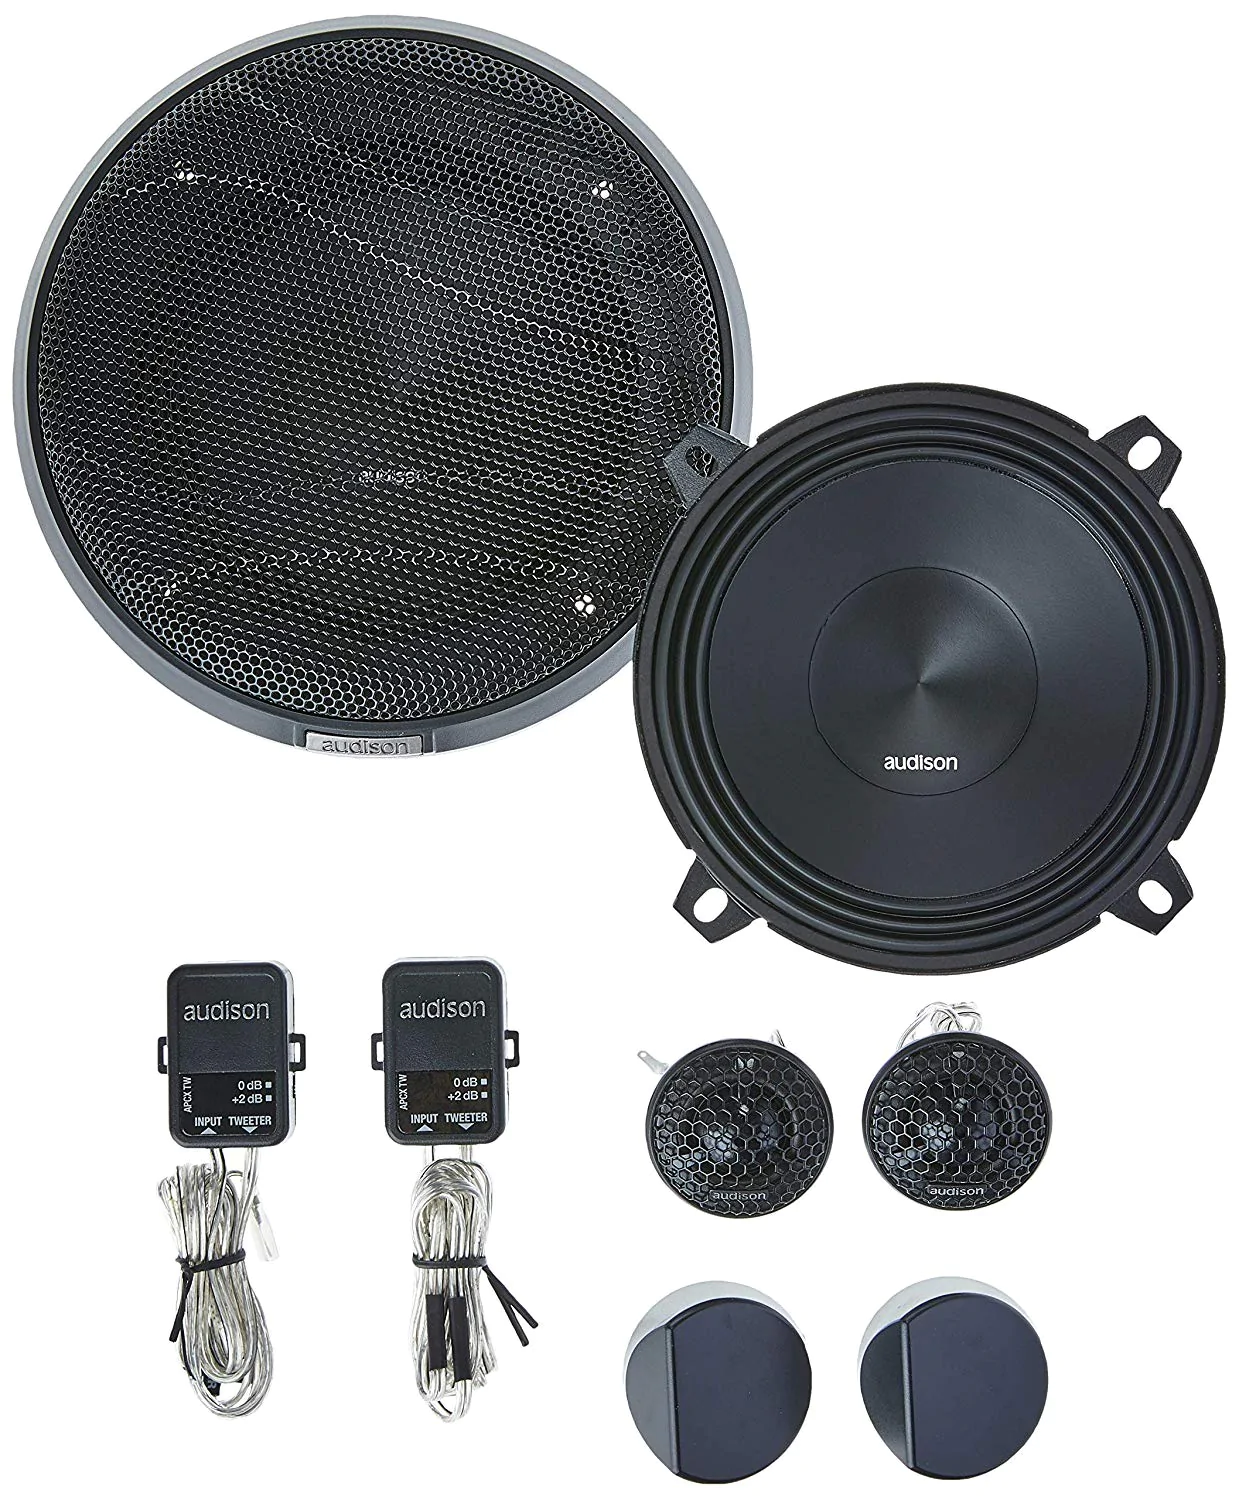 Audison APK 130 component speakers